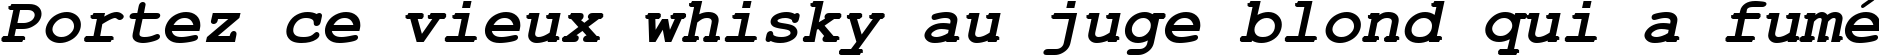 Пример написания шрифтом Courier New Bold Italic текста на французском